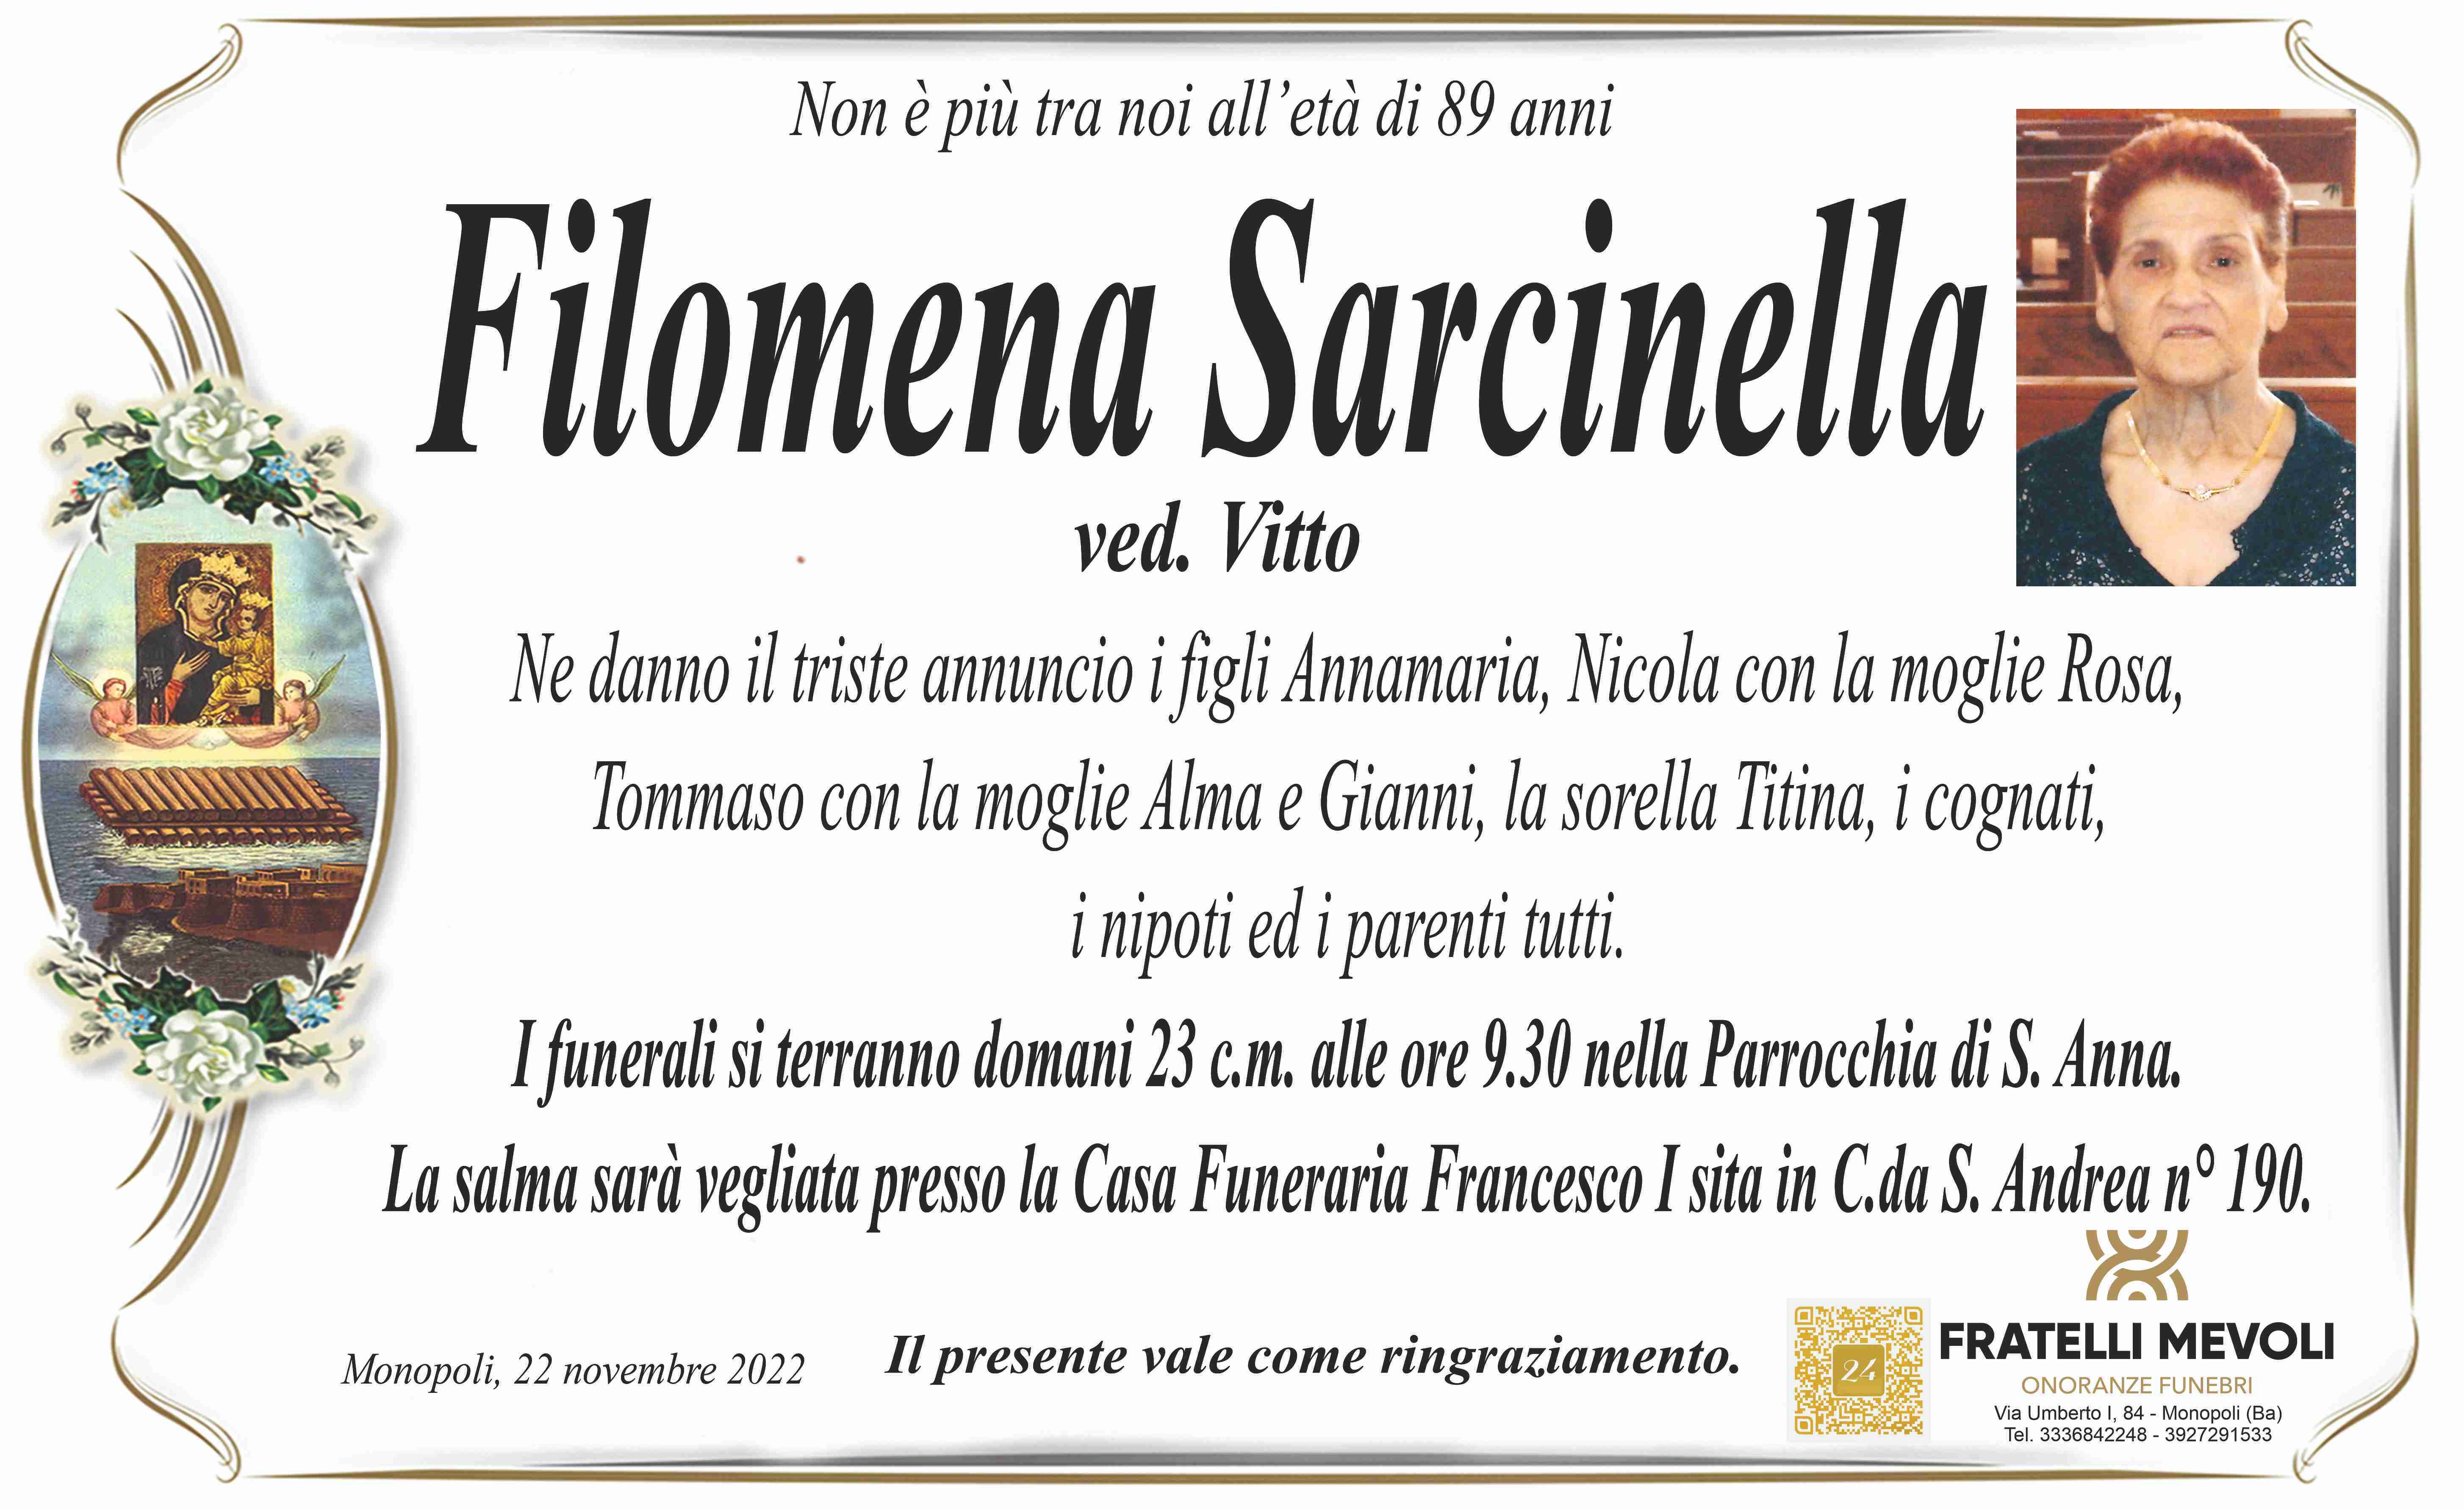 Filomena Sarcinella